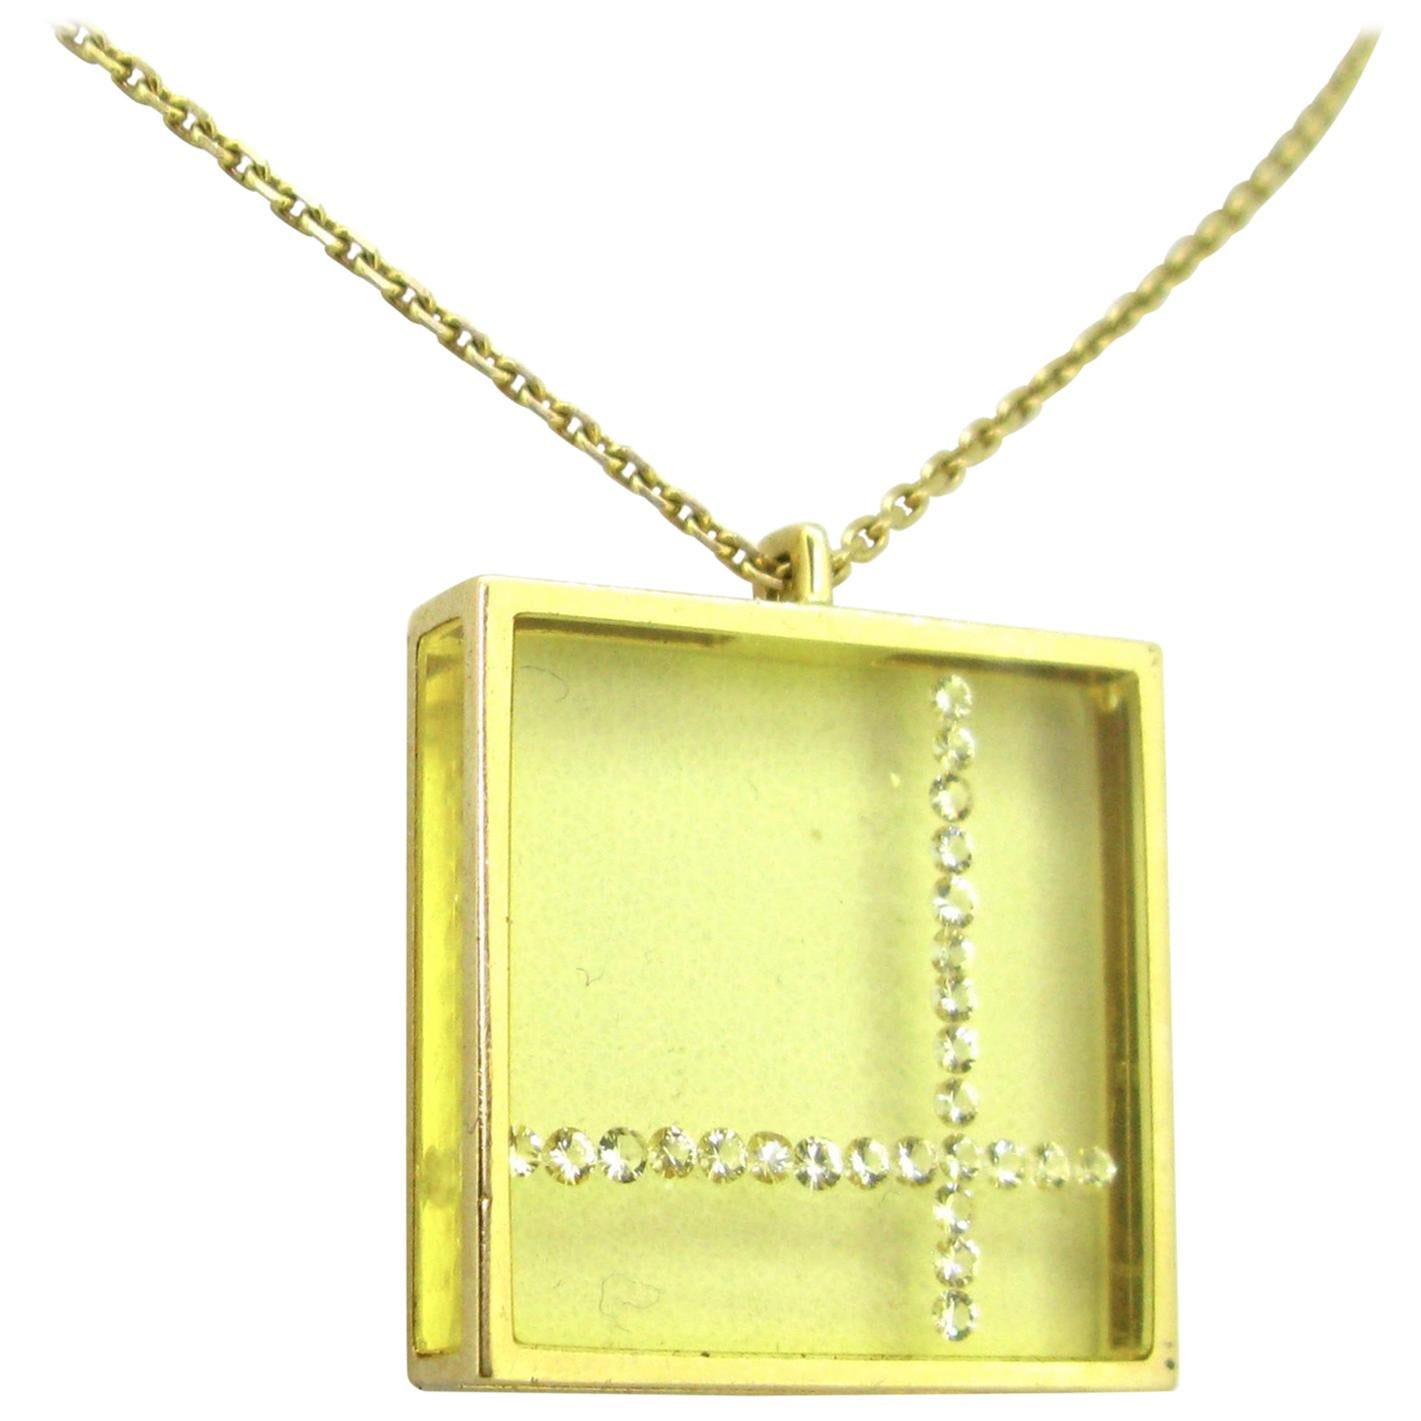 Morabito Modernist Rectangular Diamonds Pendant on Chain, 18 Karat Gold, circ